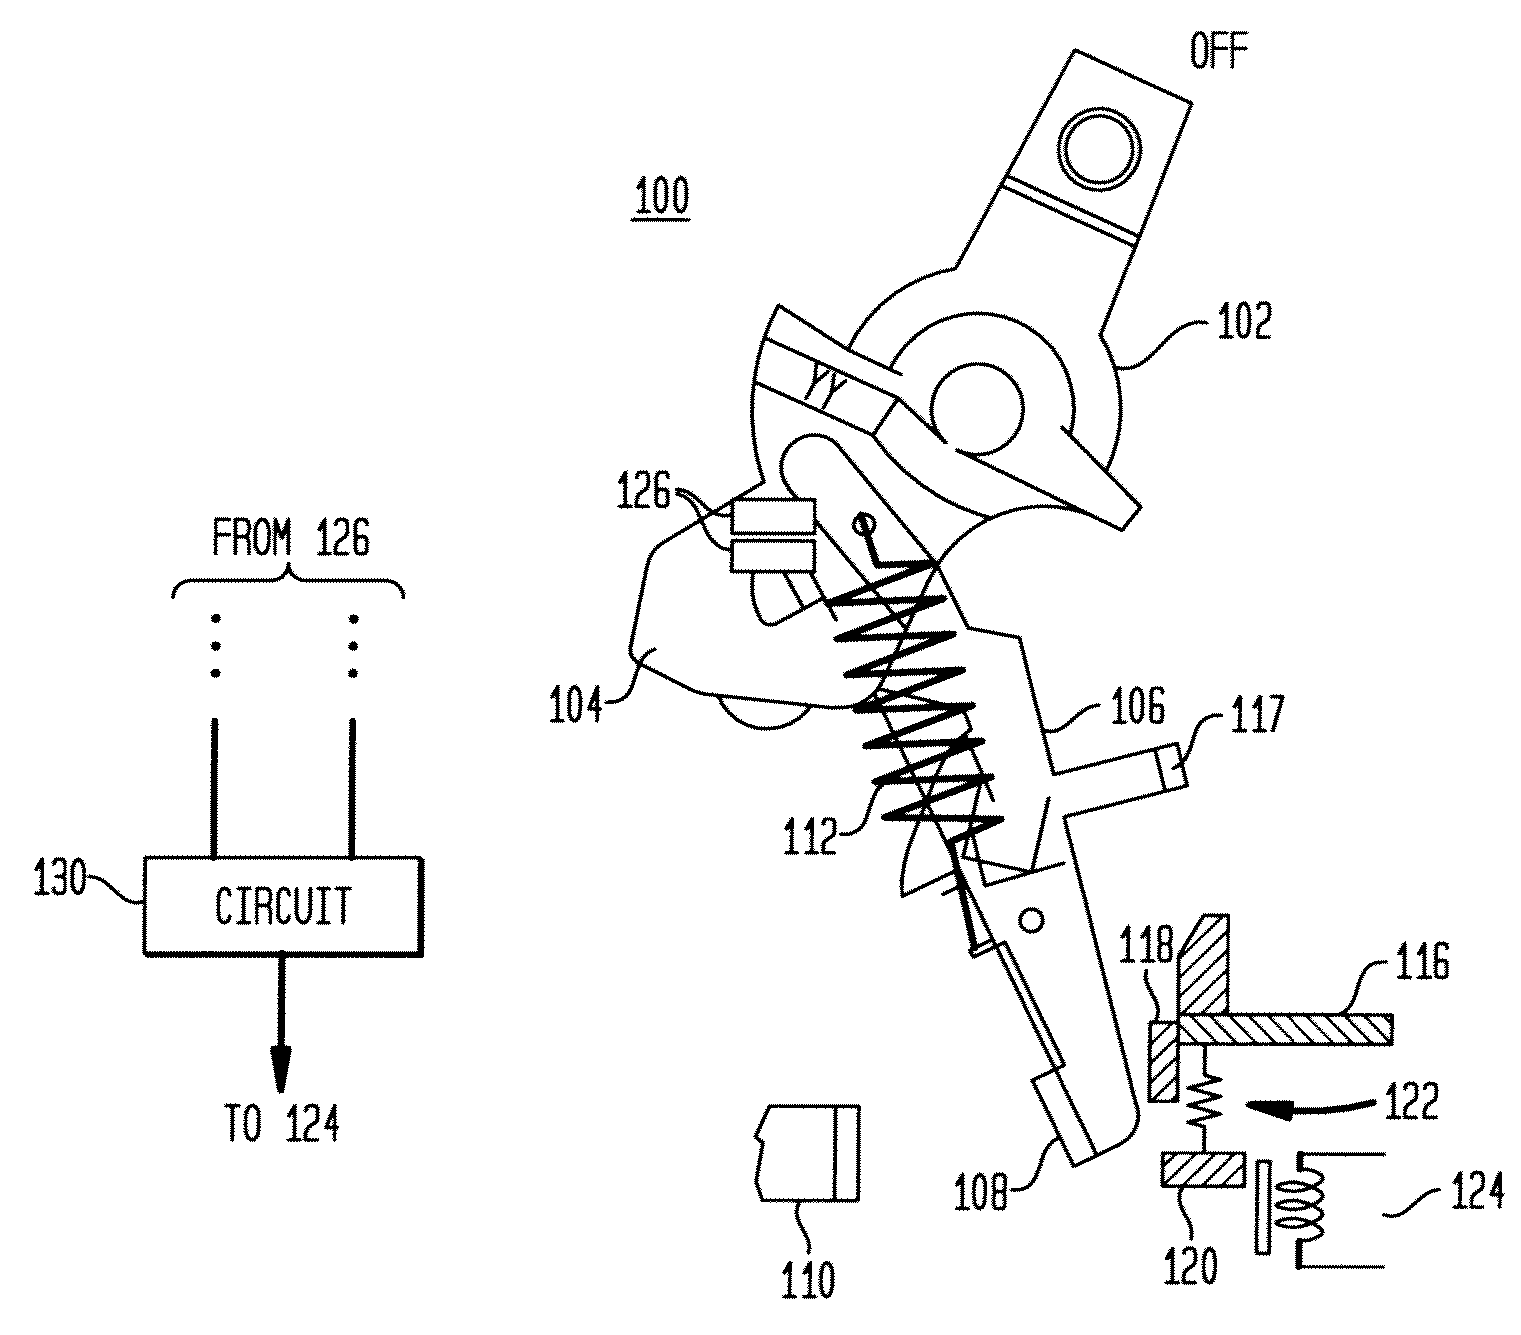 Circuit breaker locking and unlocking mechanism